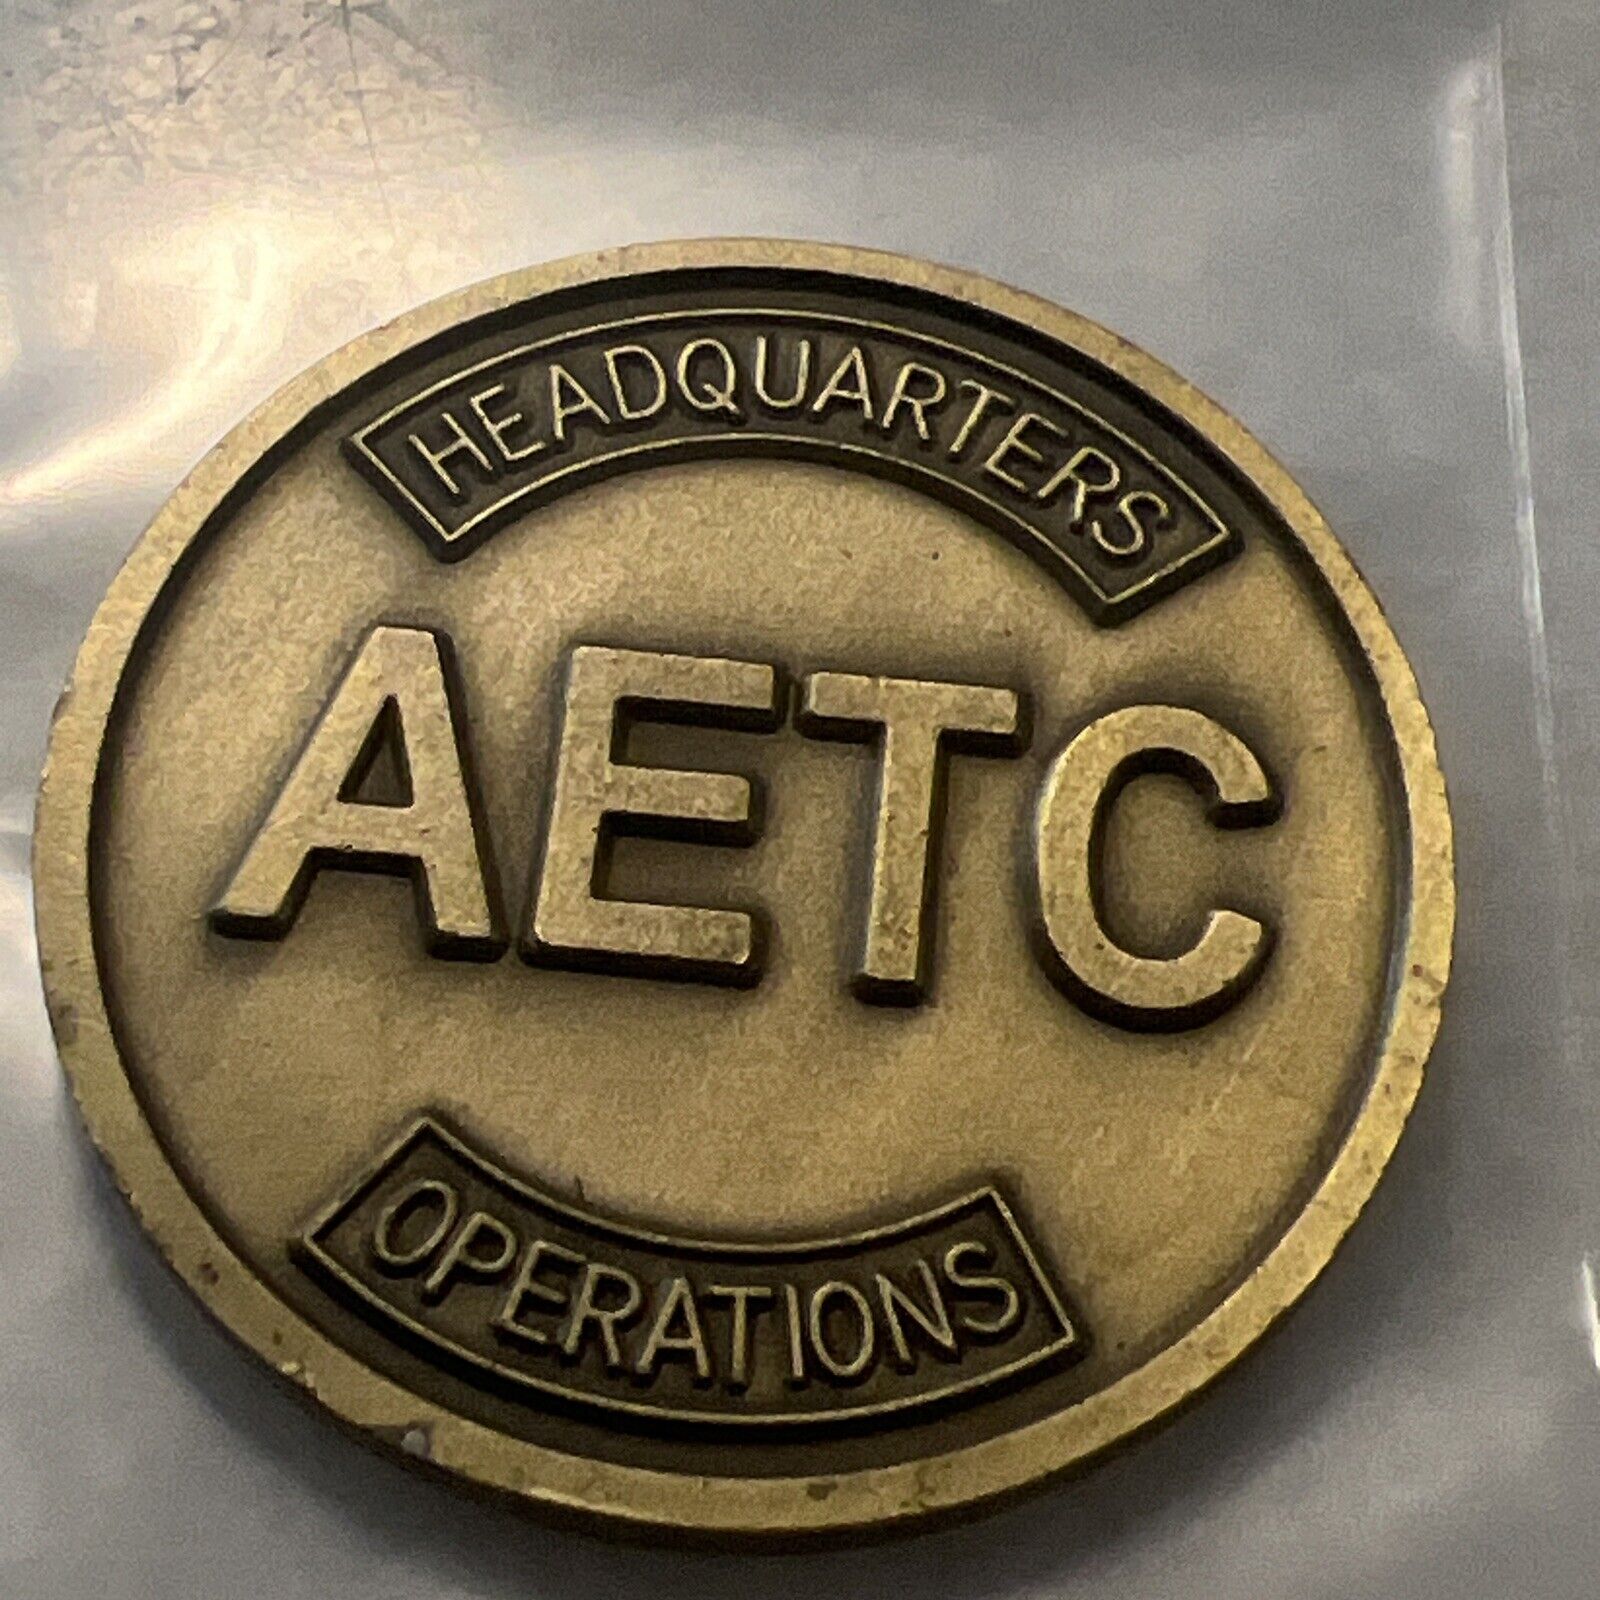 USAF AETC Air Education Training Command Headquarters Operation Randolph,Texas